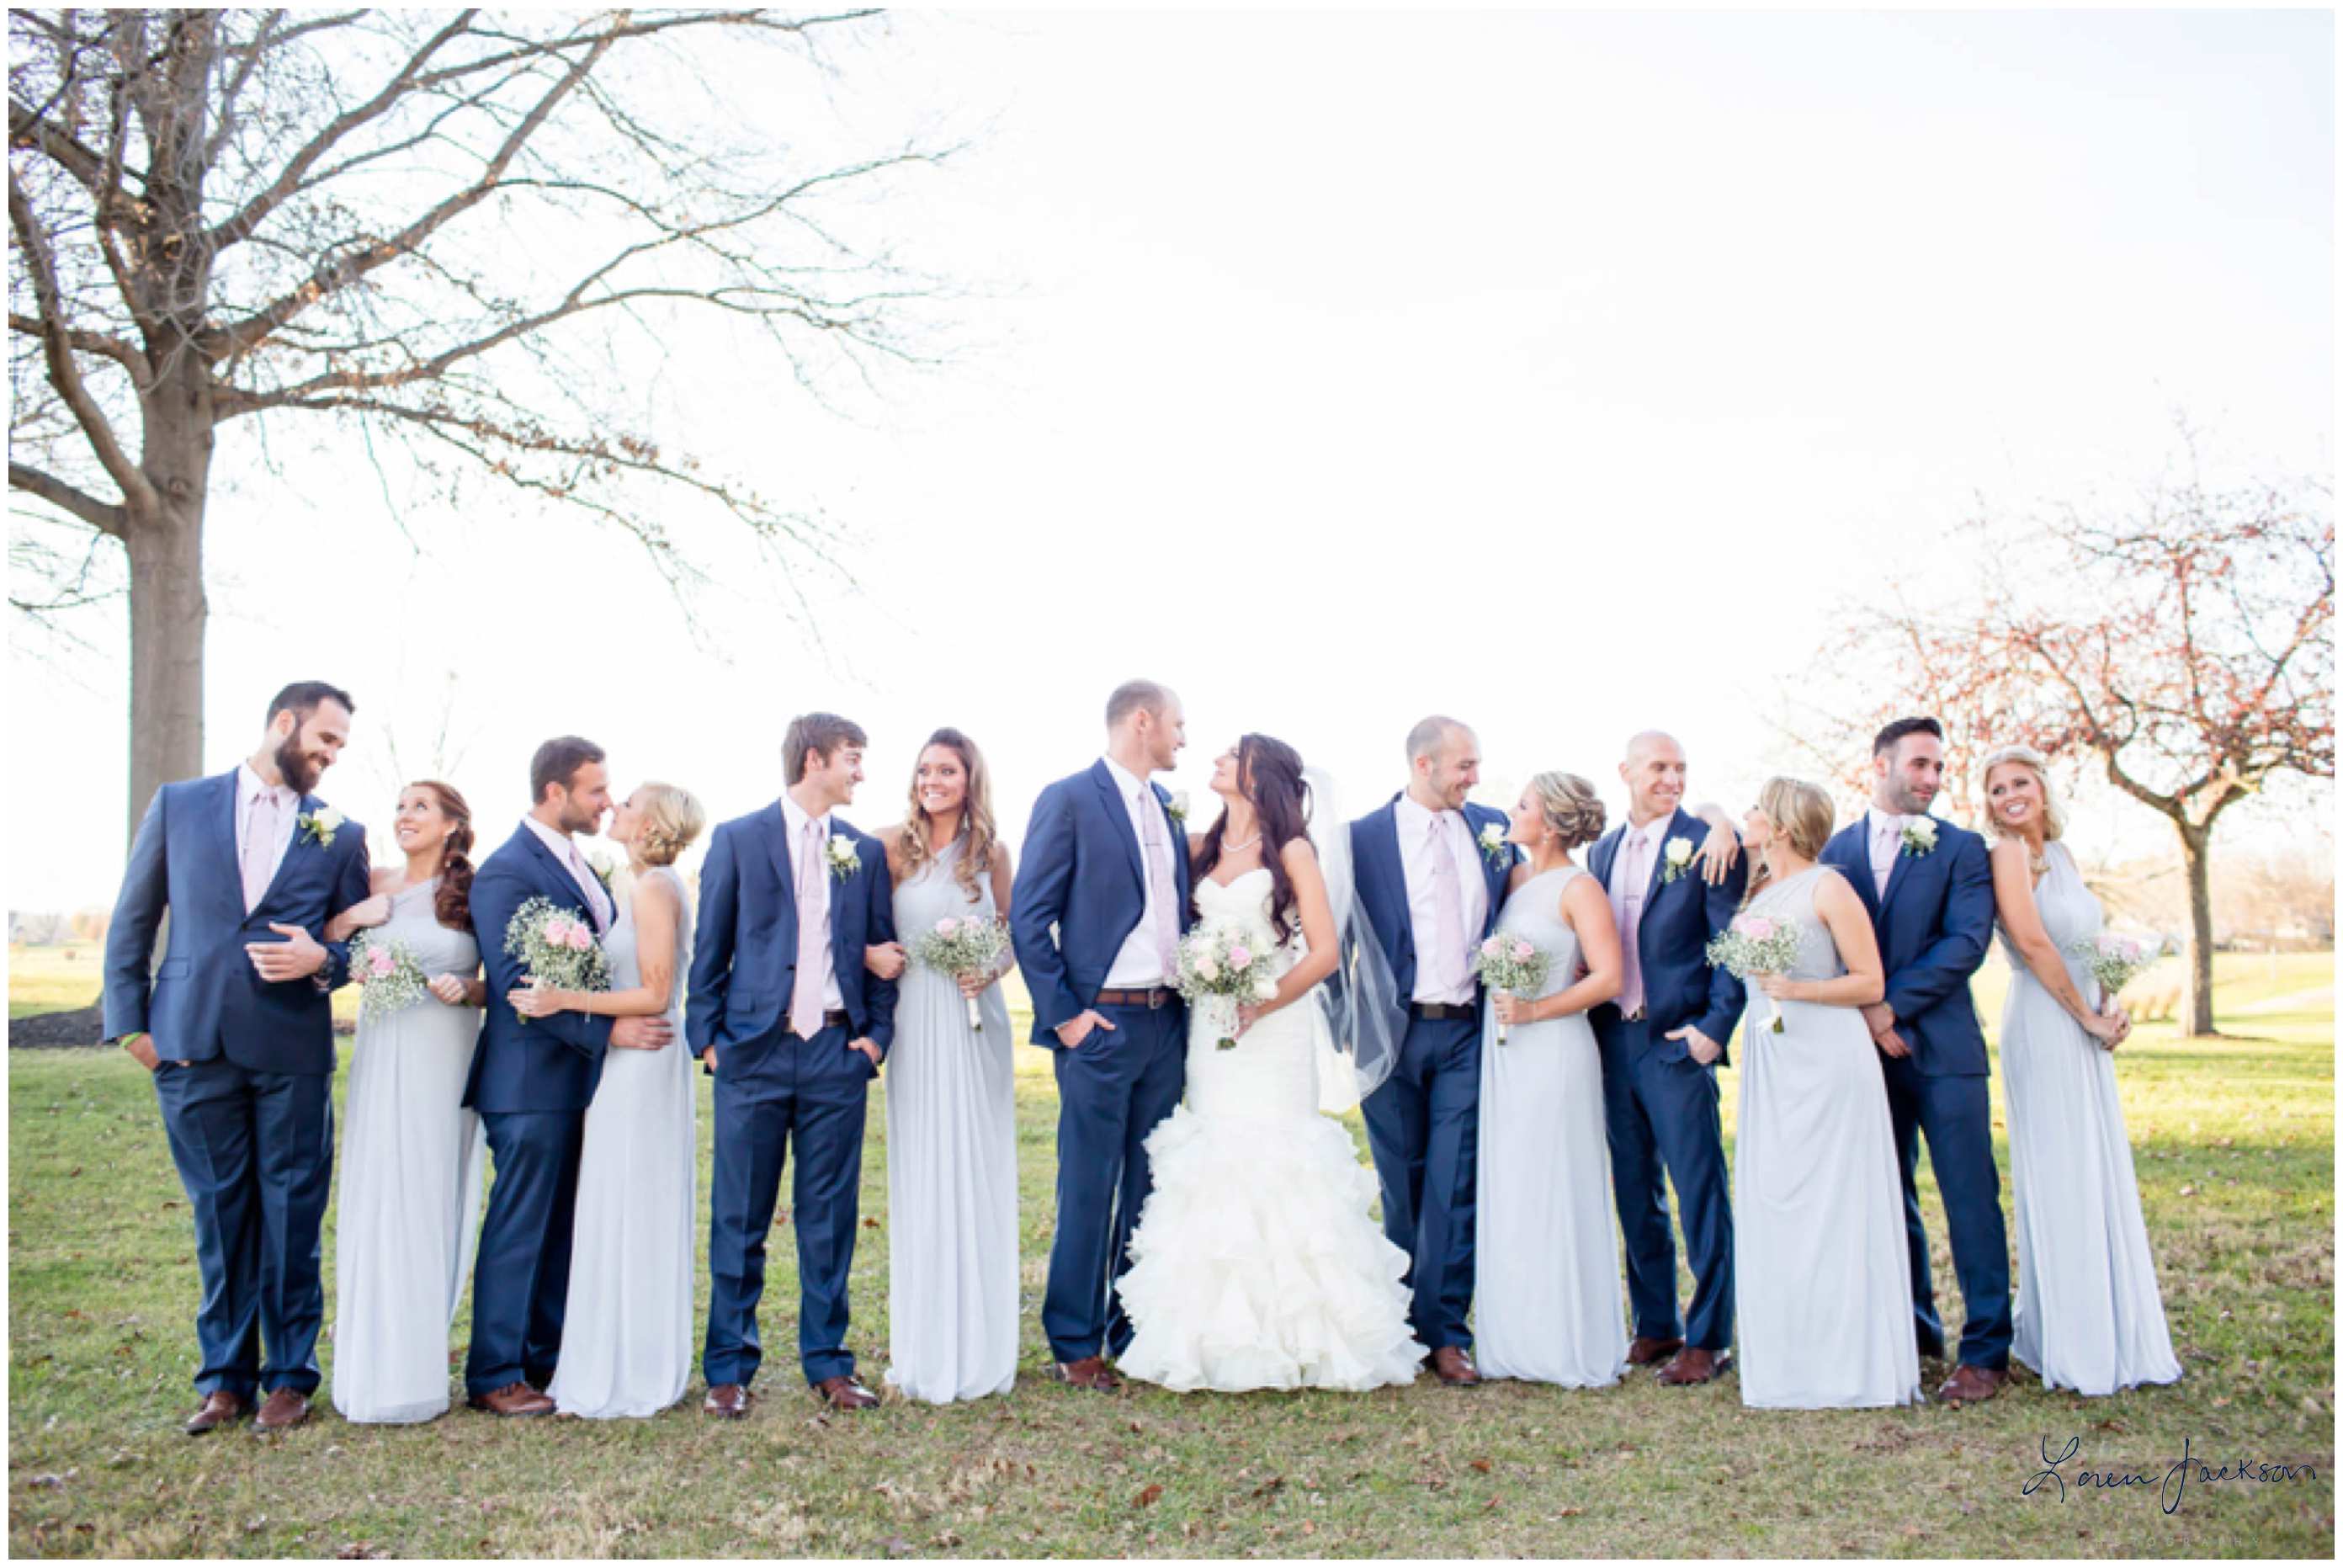 Loren-Jackson-Photography-brookside-farm-fall-wedding-53.jpg